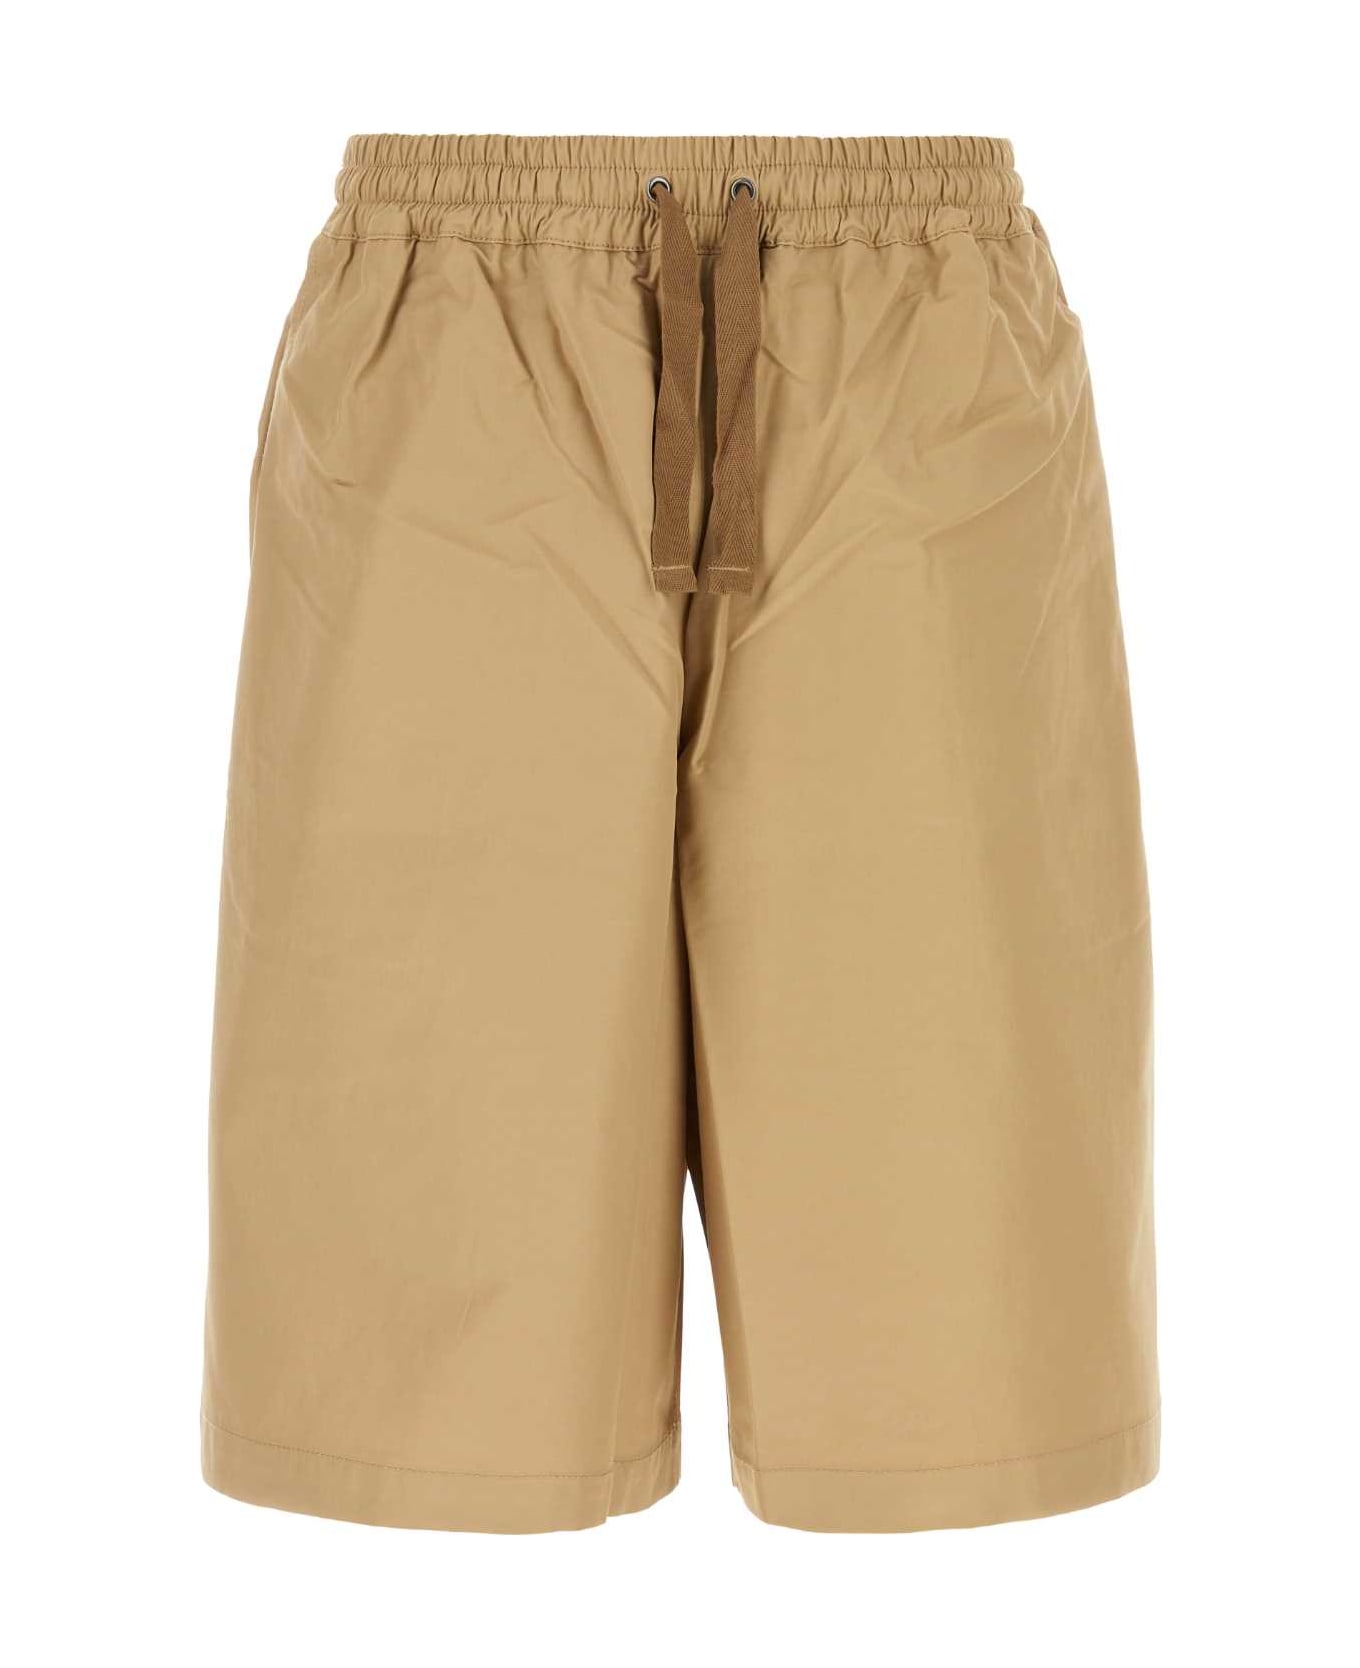 Maison Kitsuné Camel Cotton Blend Bermuda Shorts - P220